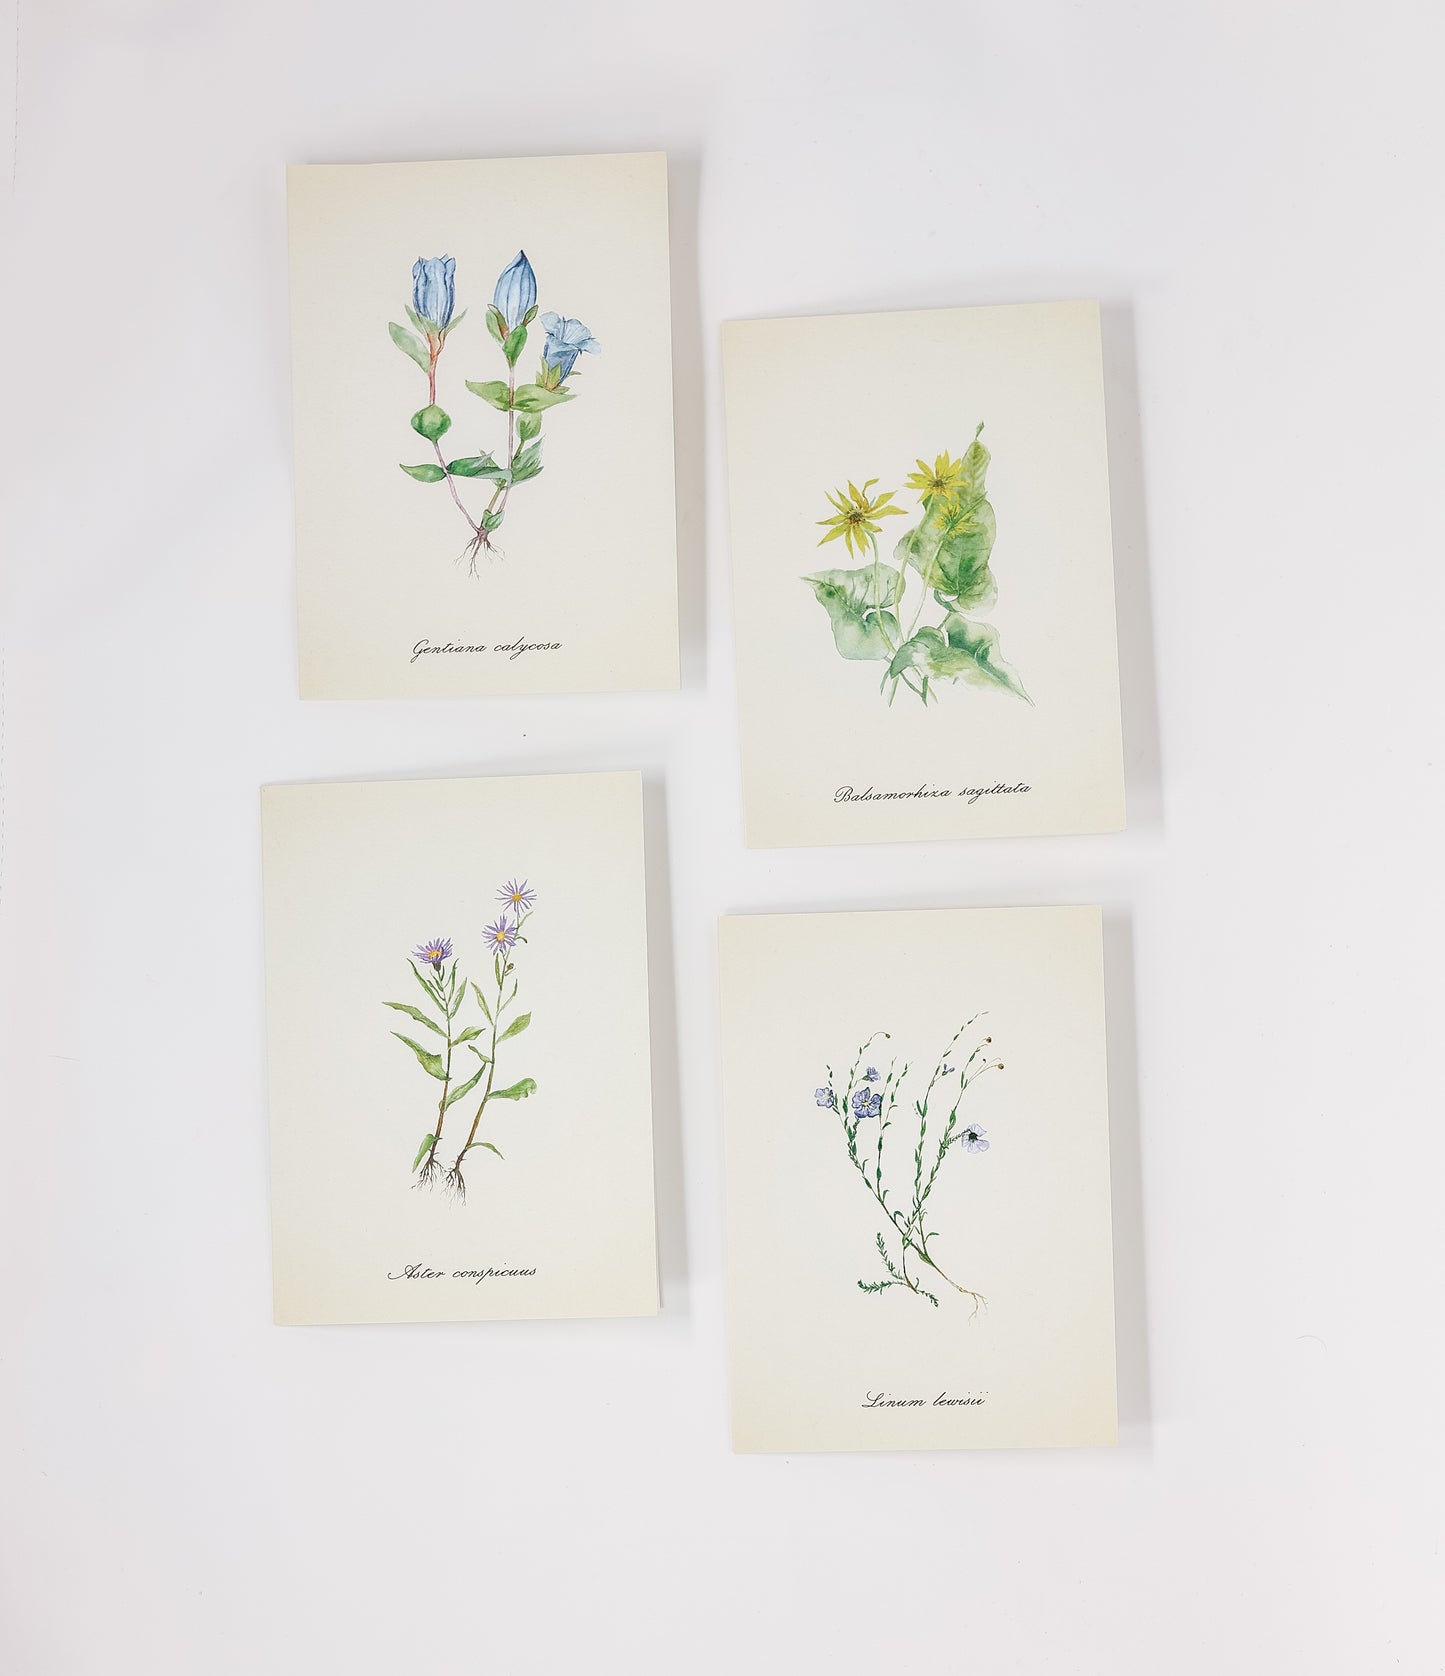 Teton Wildflower Greeting Cards